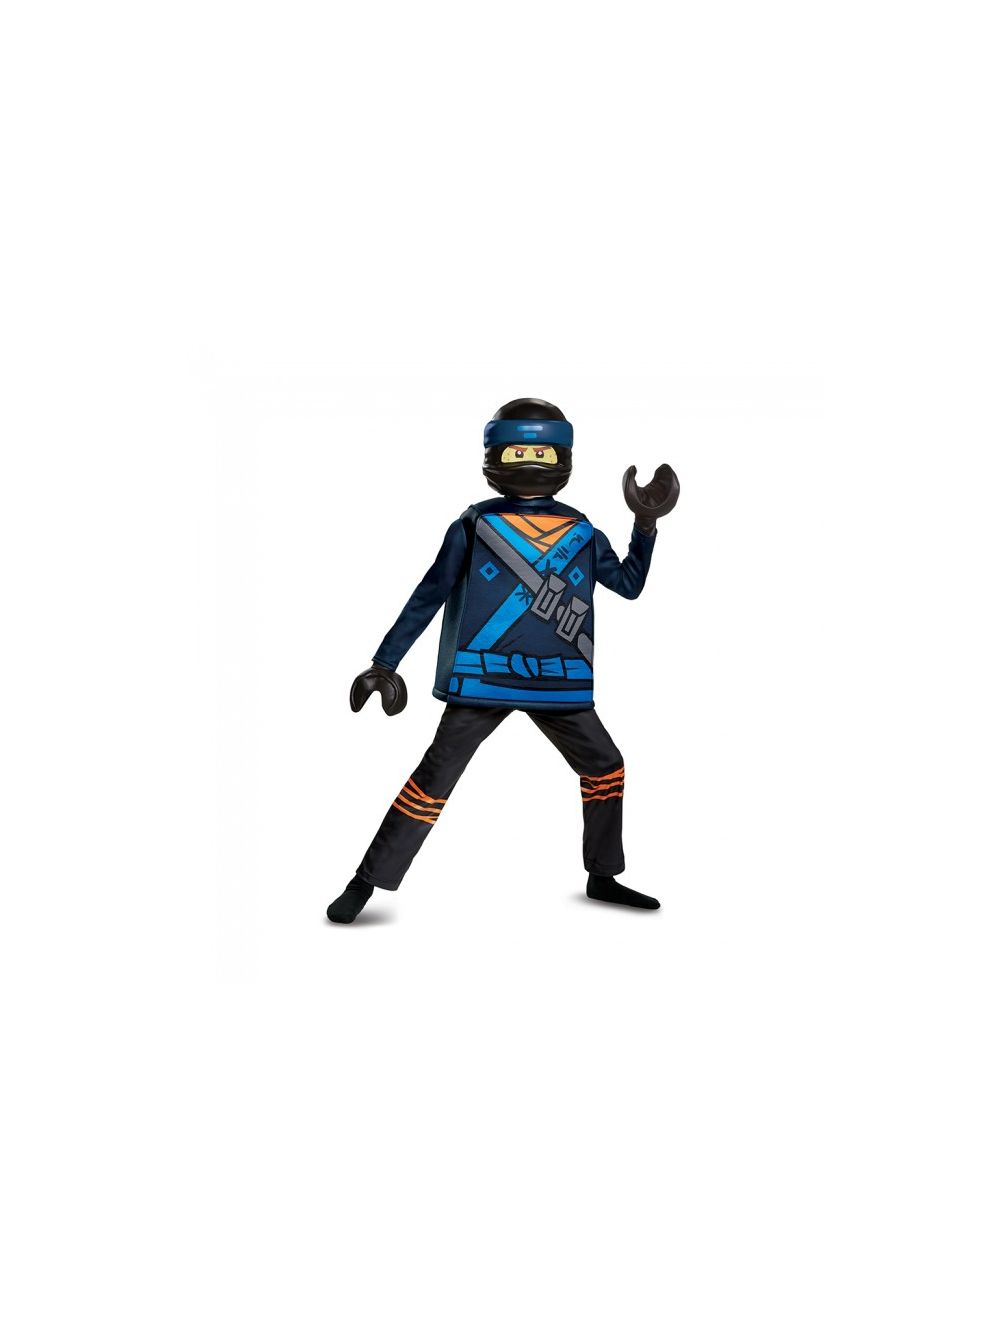 Jay Lego Ninjago Movie Deluxe Costume, Blue, Medium (7-8)